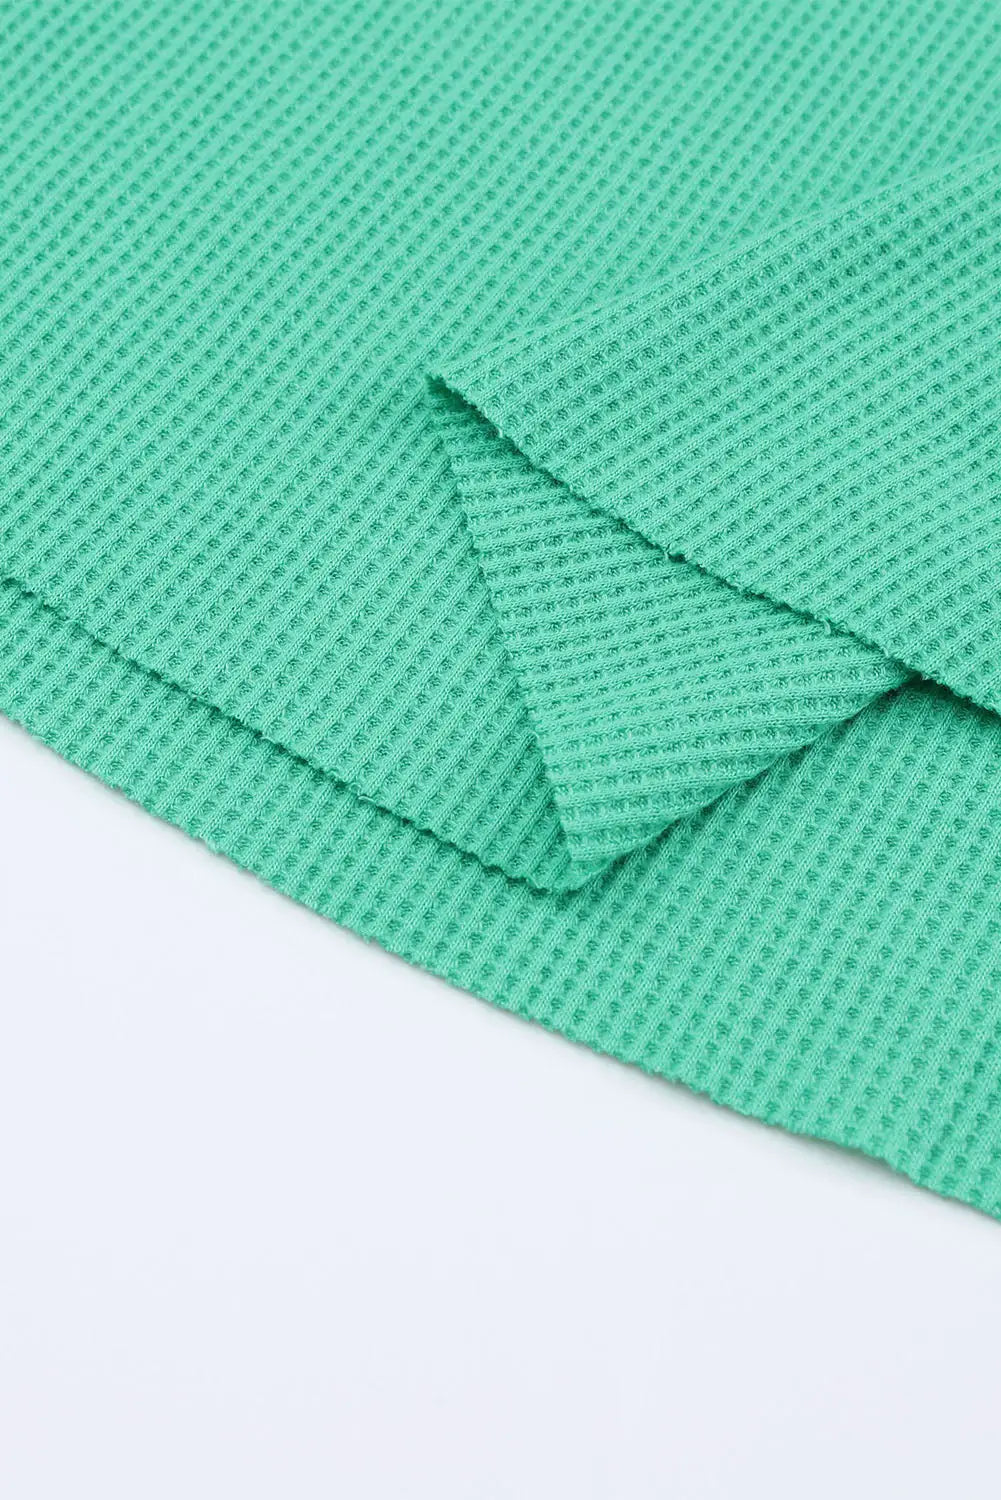 Green trimmed neckline waffle knit henley top - long sleeve tops